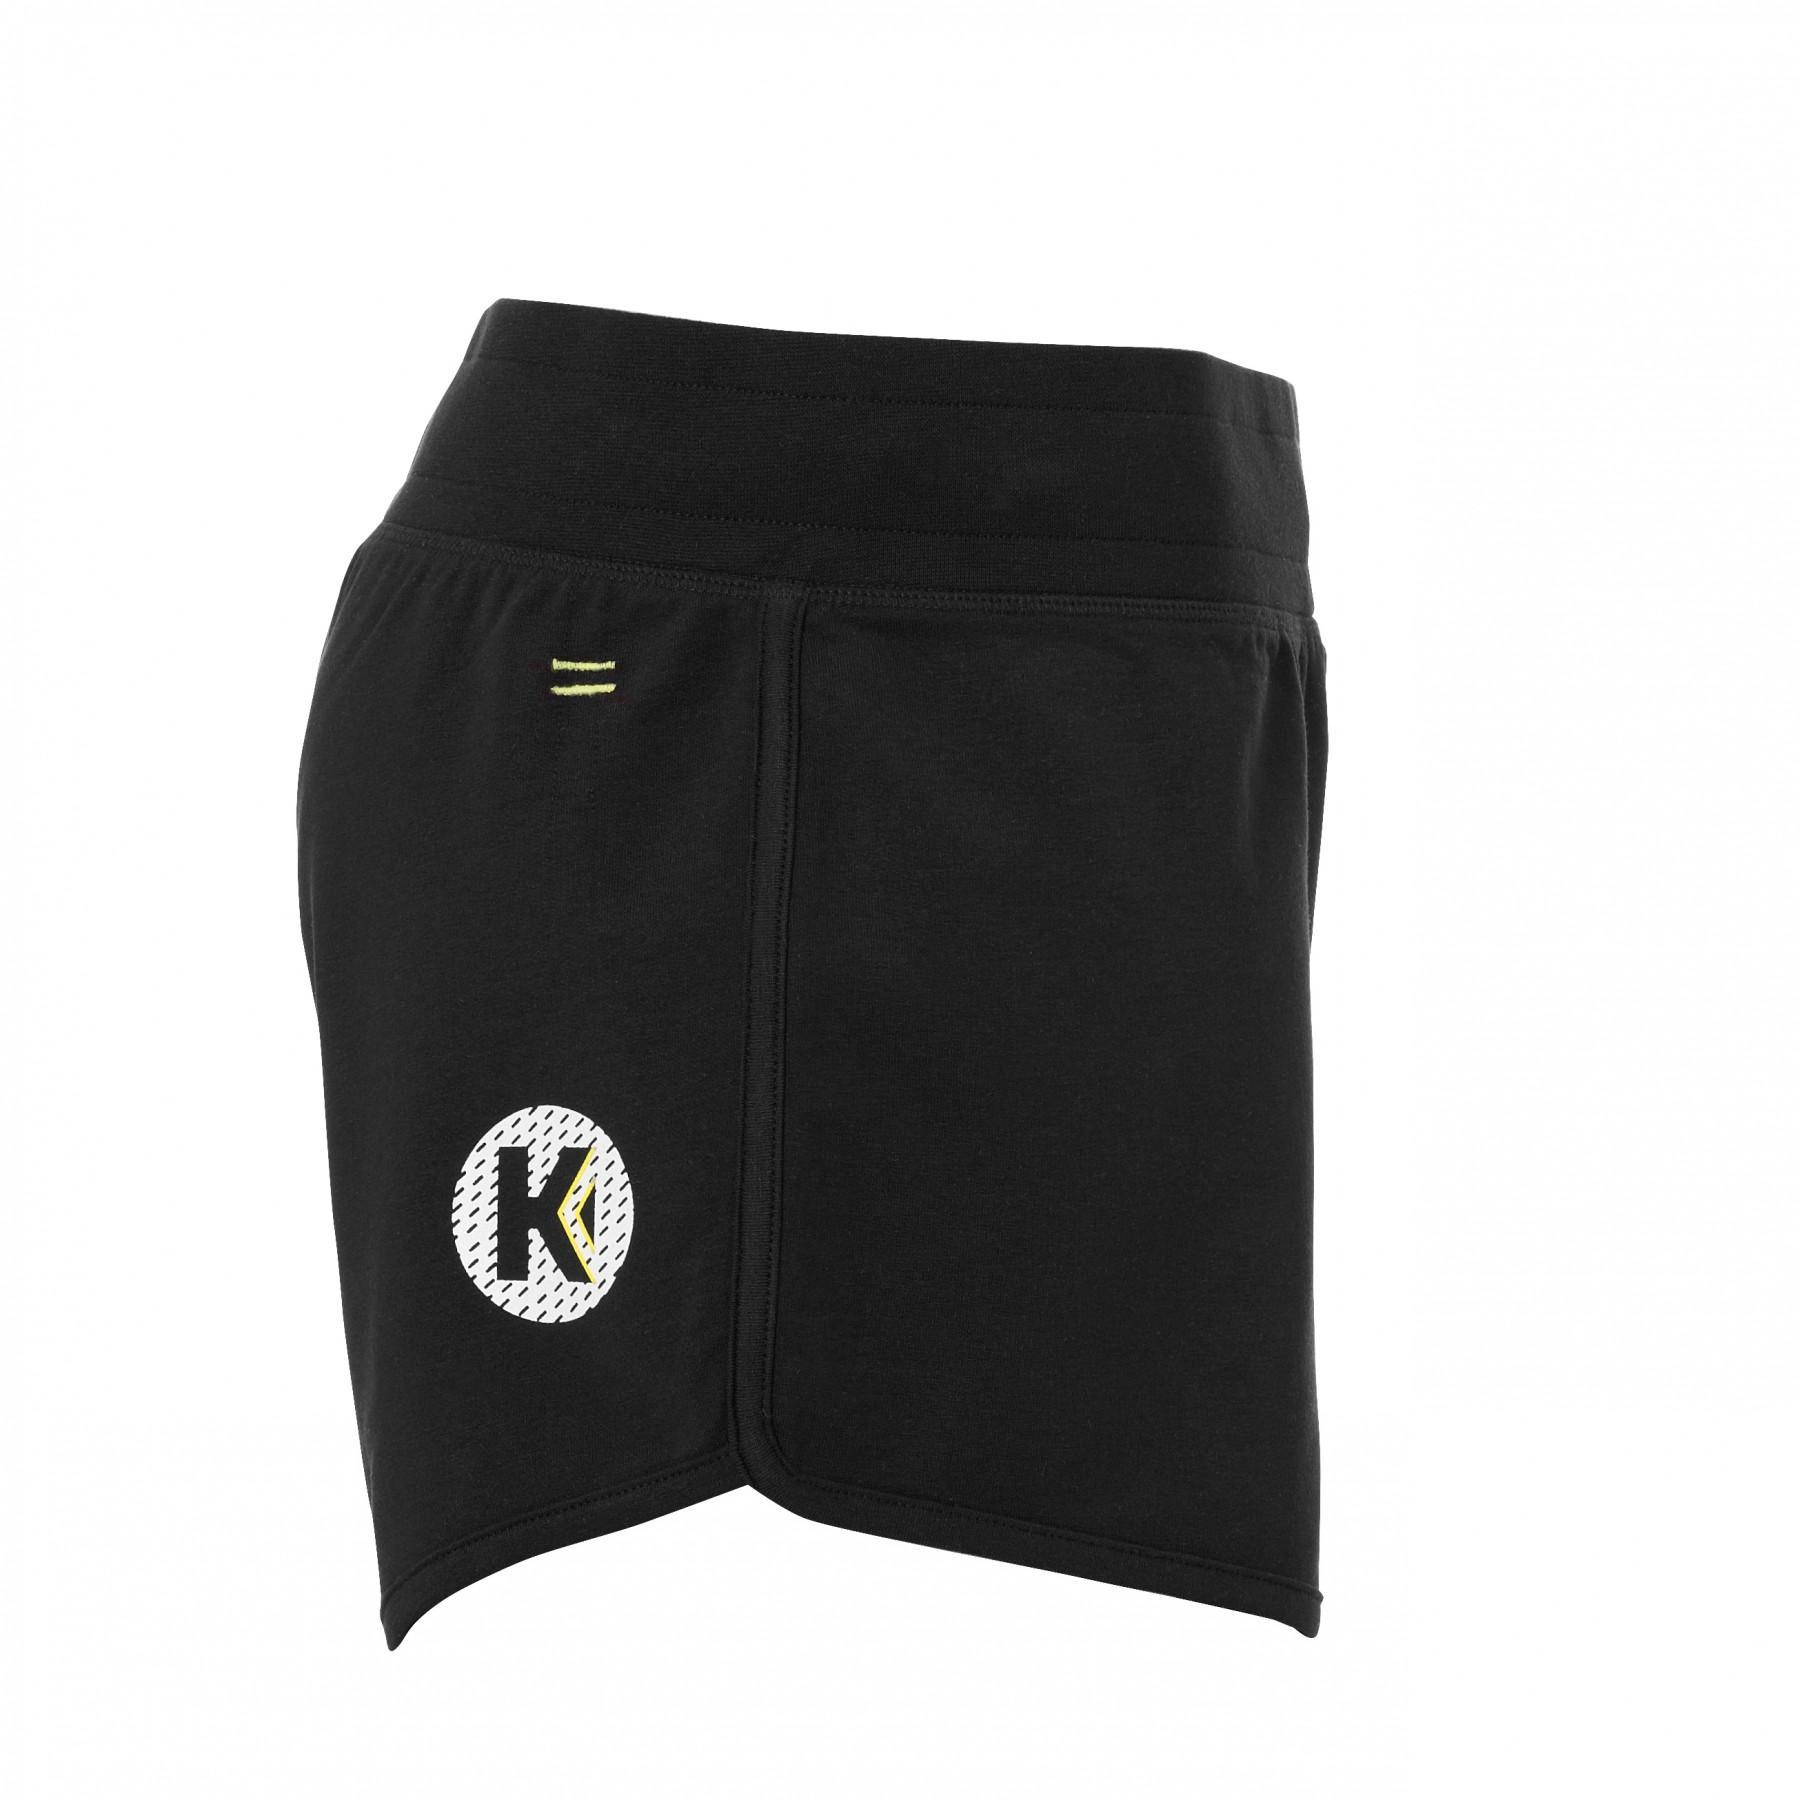 Dames shorts Kempa Core 2.0 Sweat